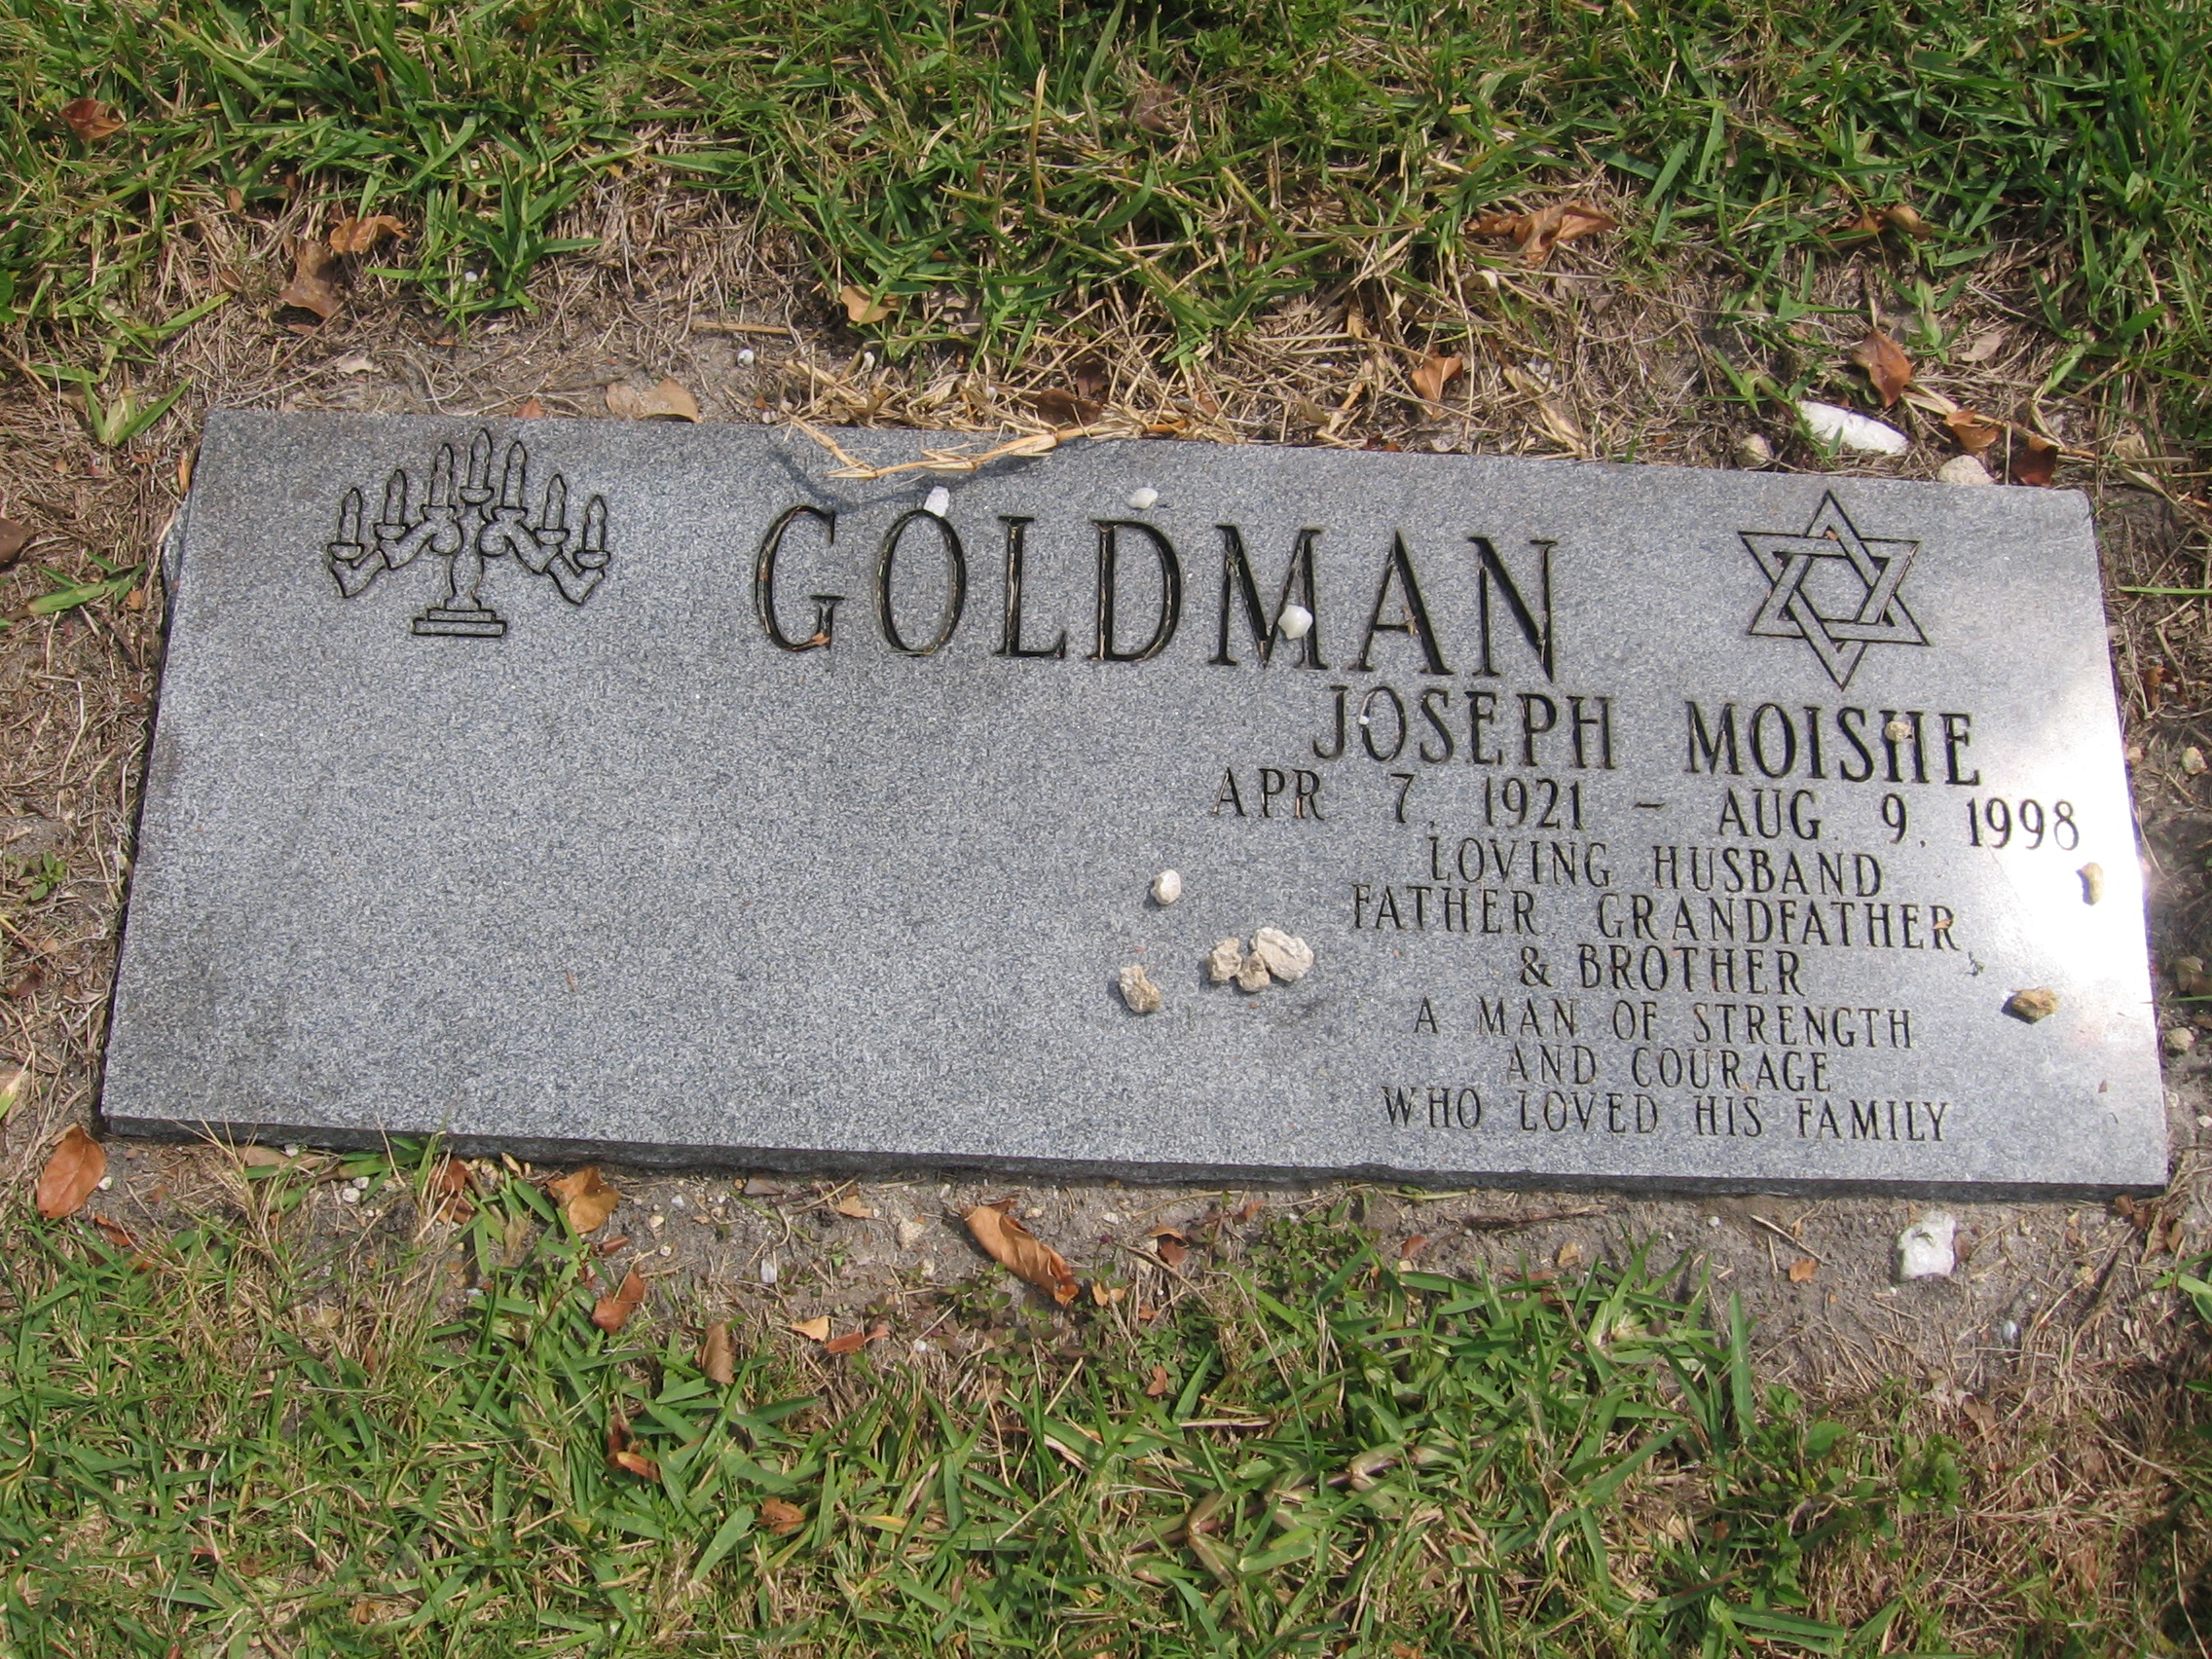 Joseph Moishe Goldman